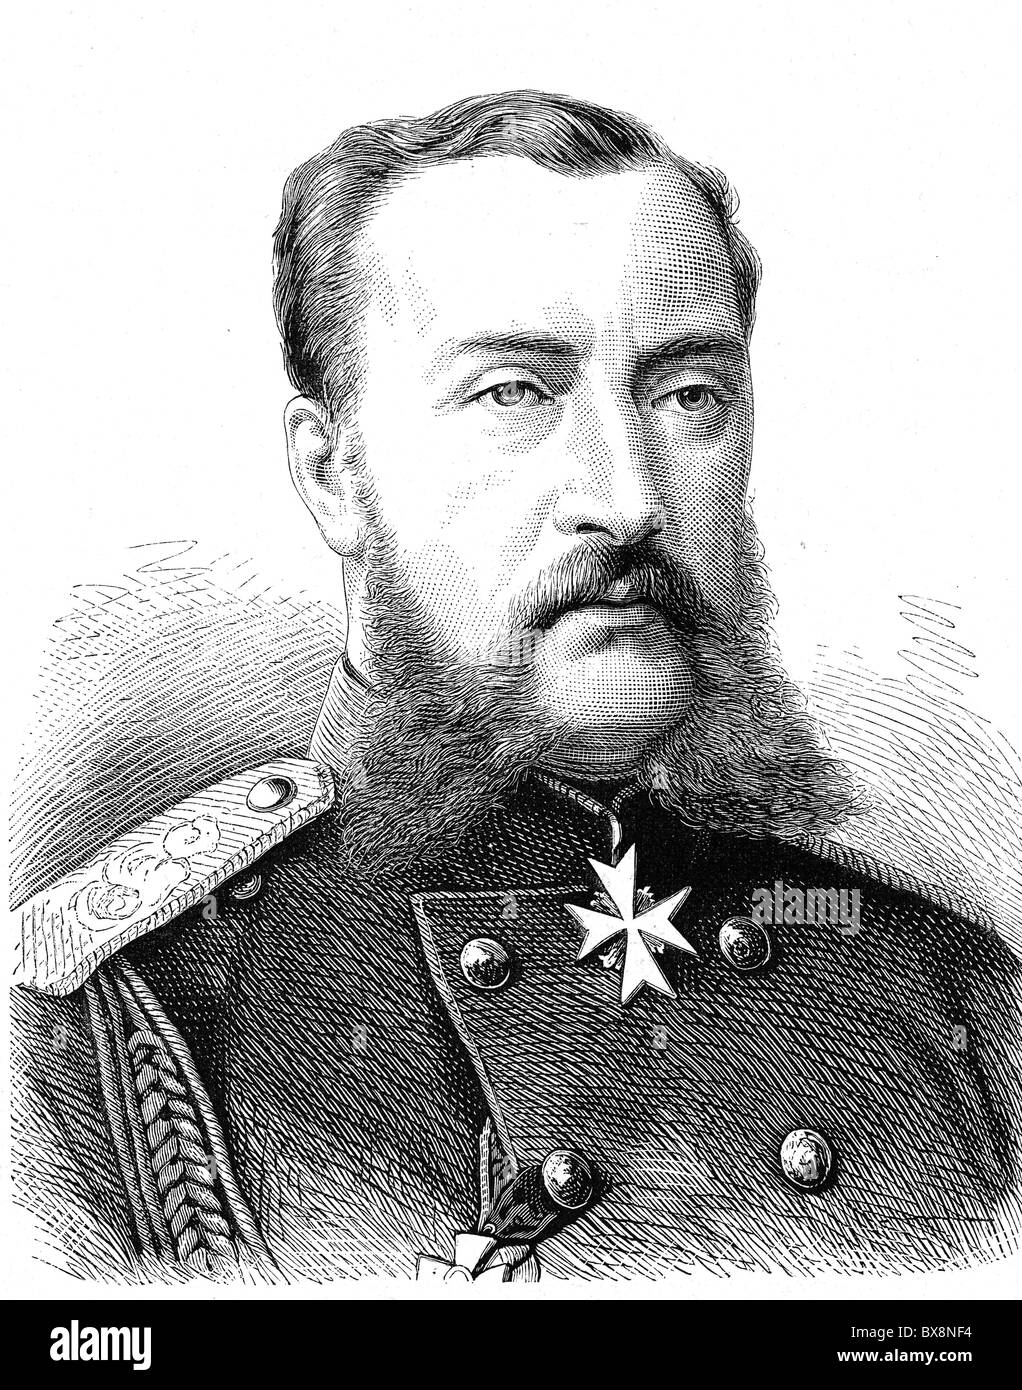 Nicholas Nikolaevich, 8.8.1831 - 25.4.1891, Grand Duke of Russia, Russian field marshal, portrait, wood engraving, late 19th century, Stock Photo